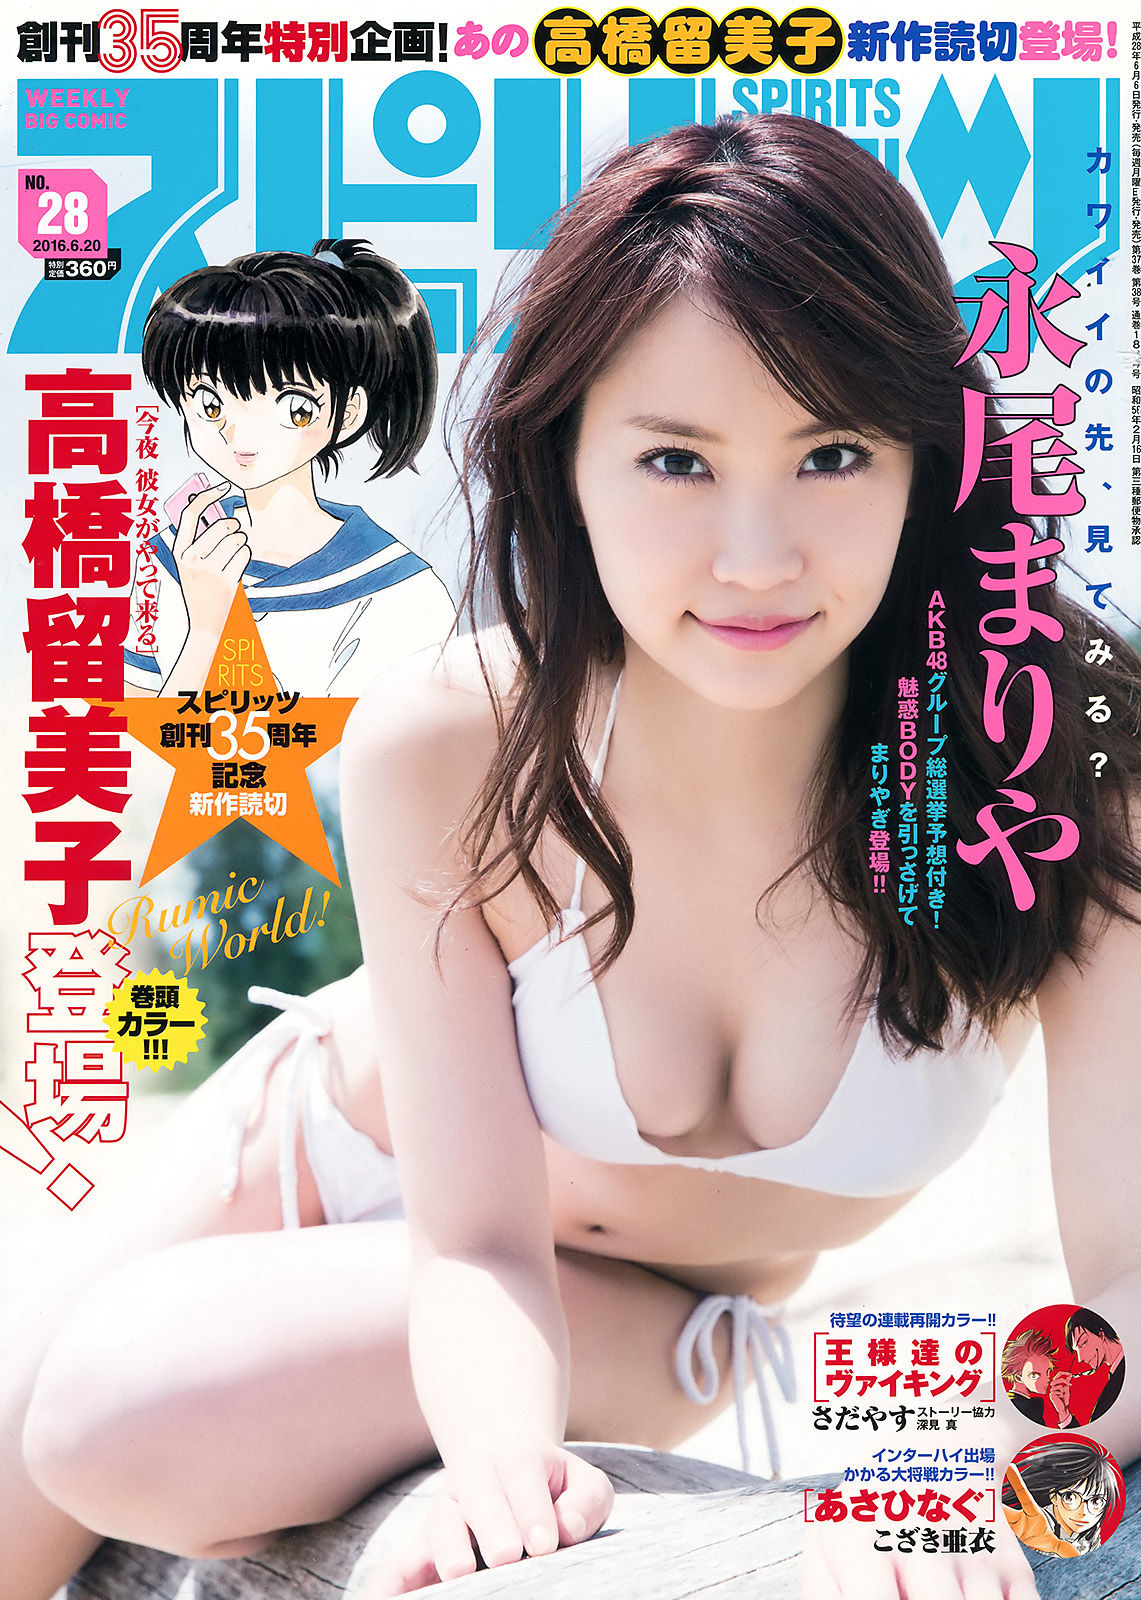 [Weekly Big Comic Spirits]美胸日本女星:永尾玛利亚(永尾まりや)高品质壁纸图片珍藏版(7P)